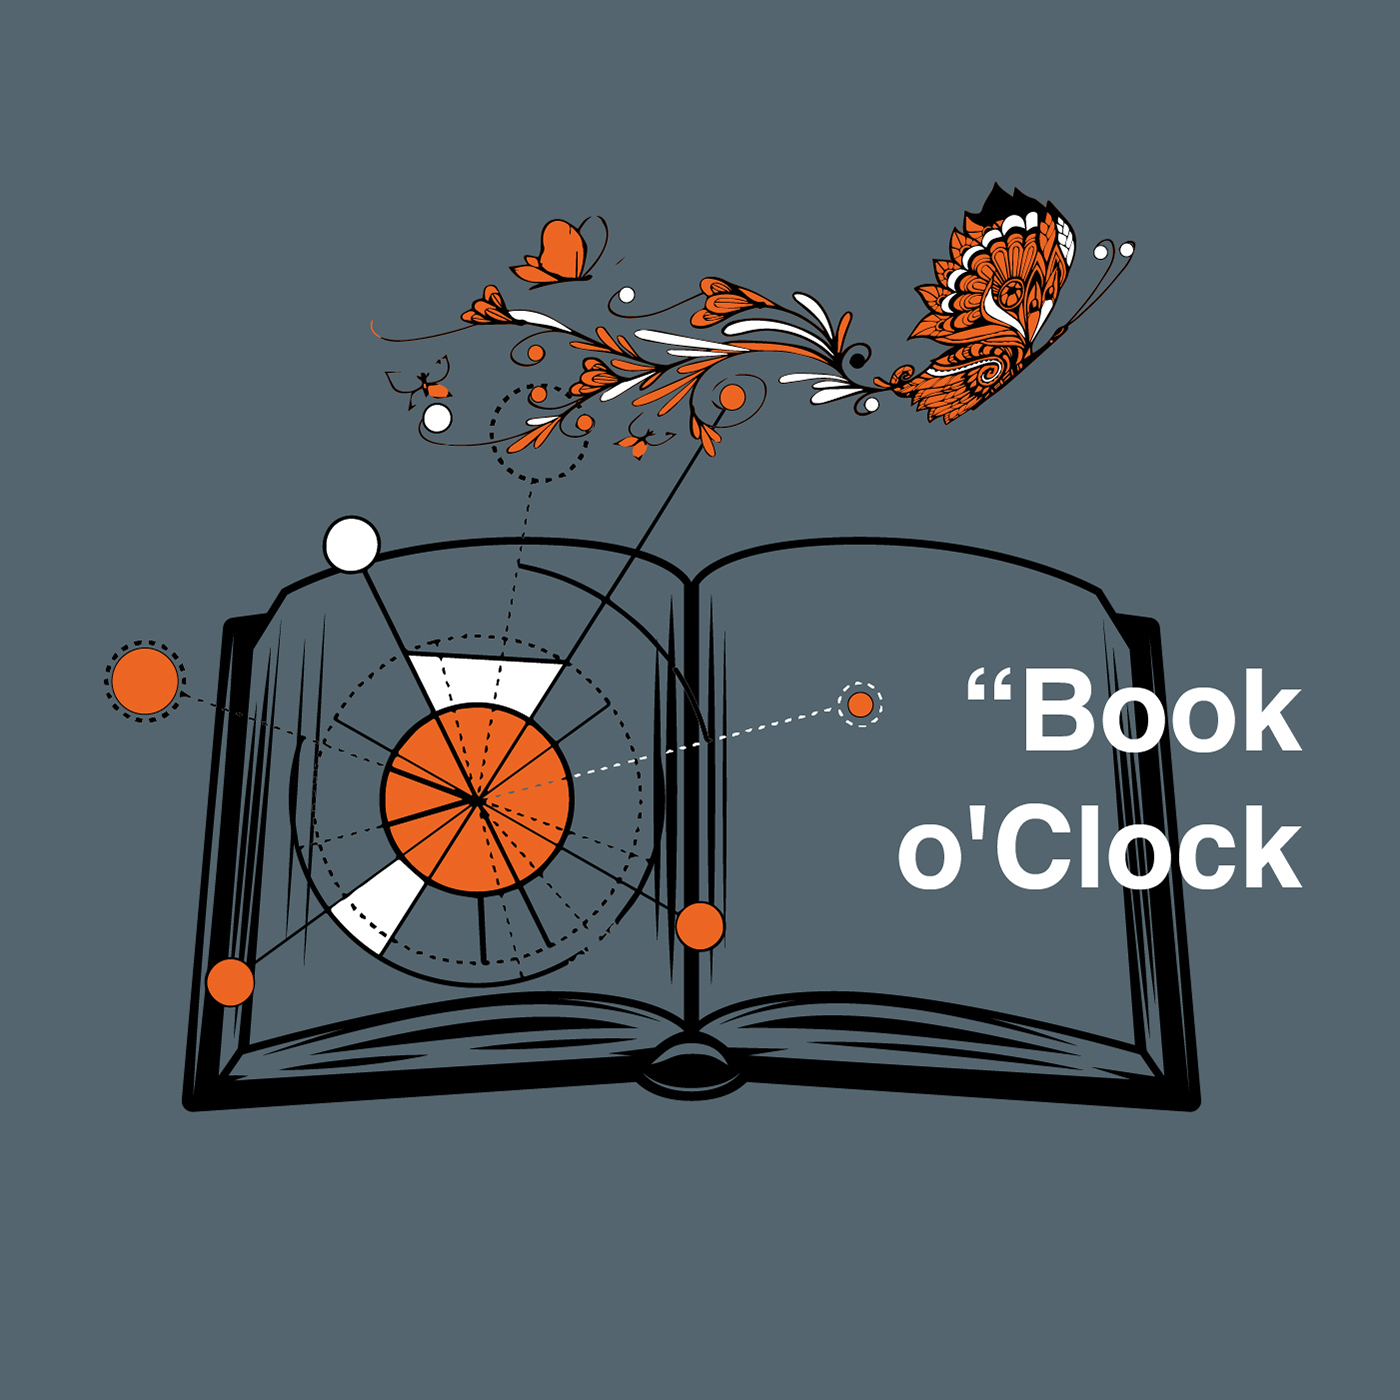 podcast: Υπάρχει για κάθε παιδί ένα βιβλίο